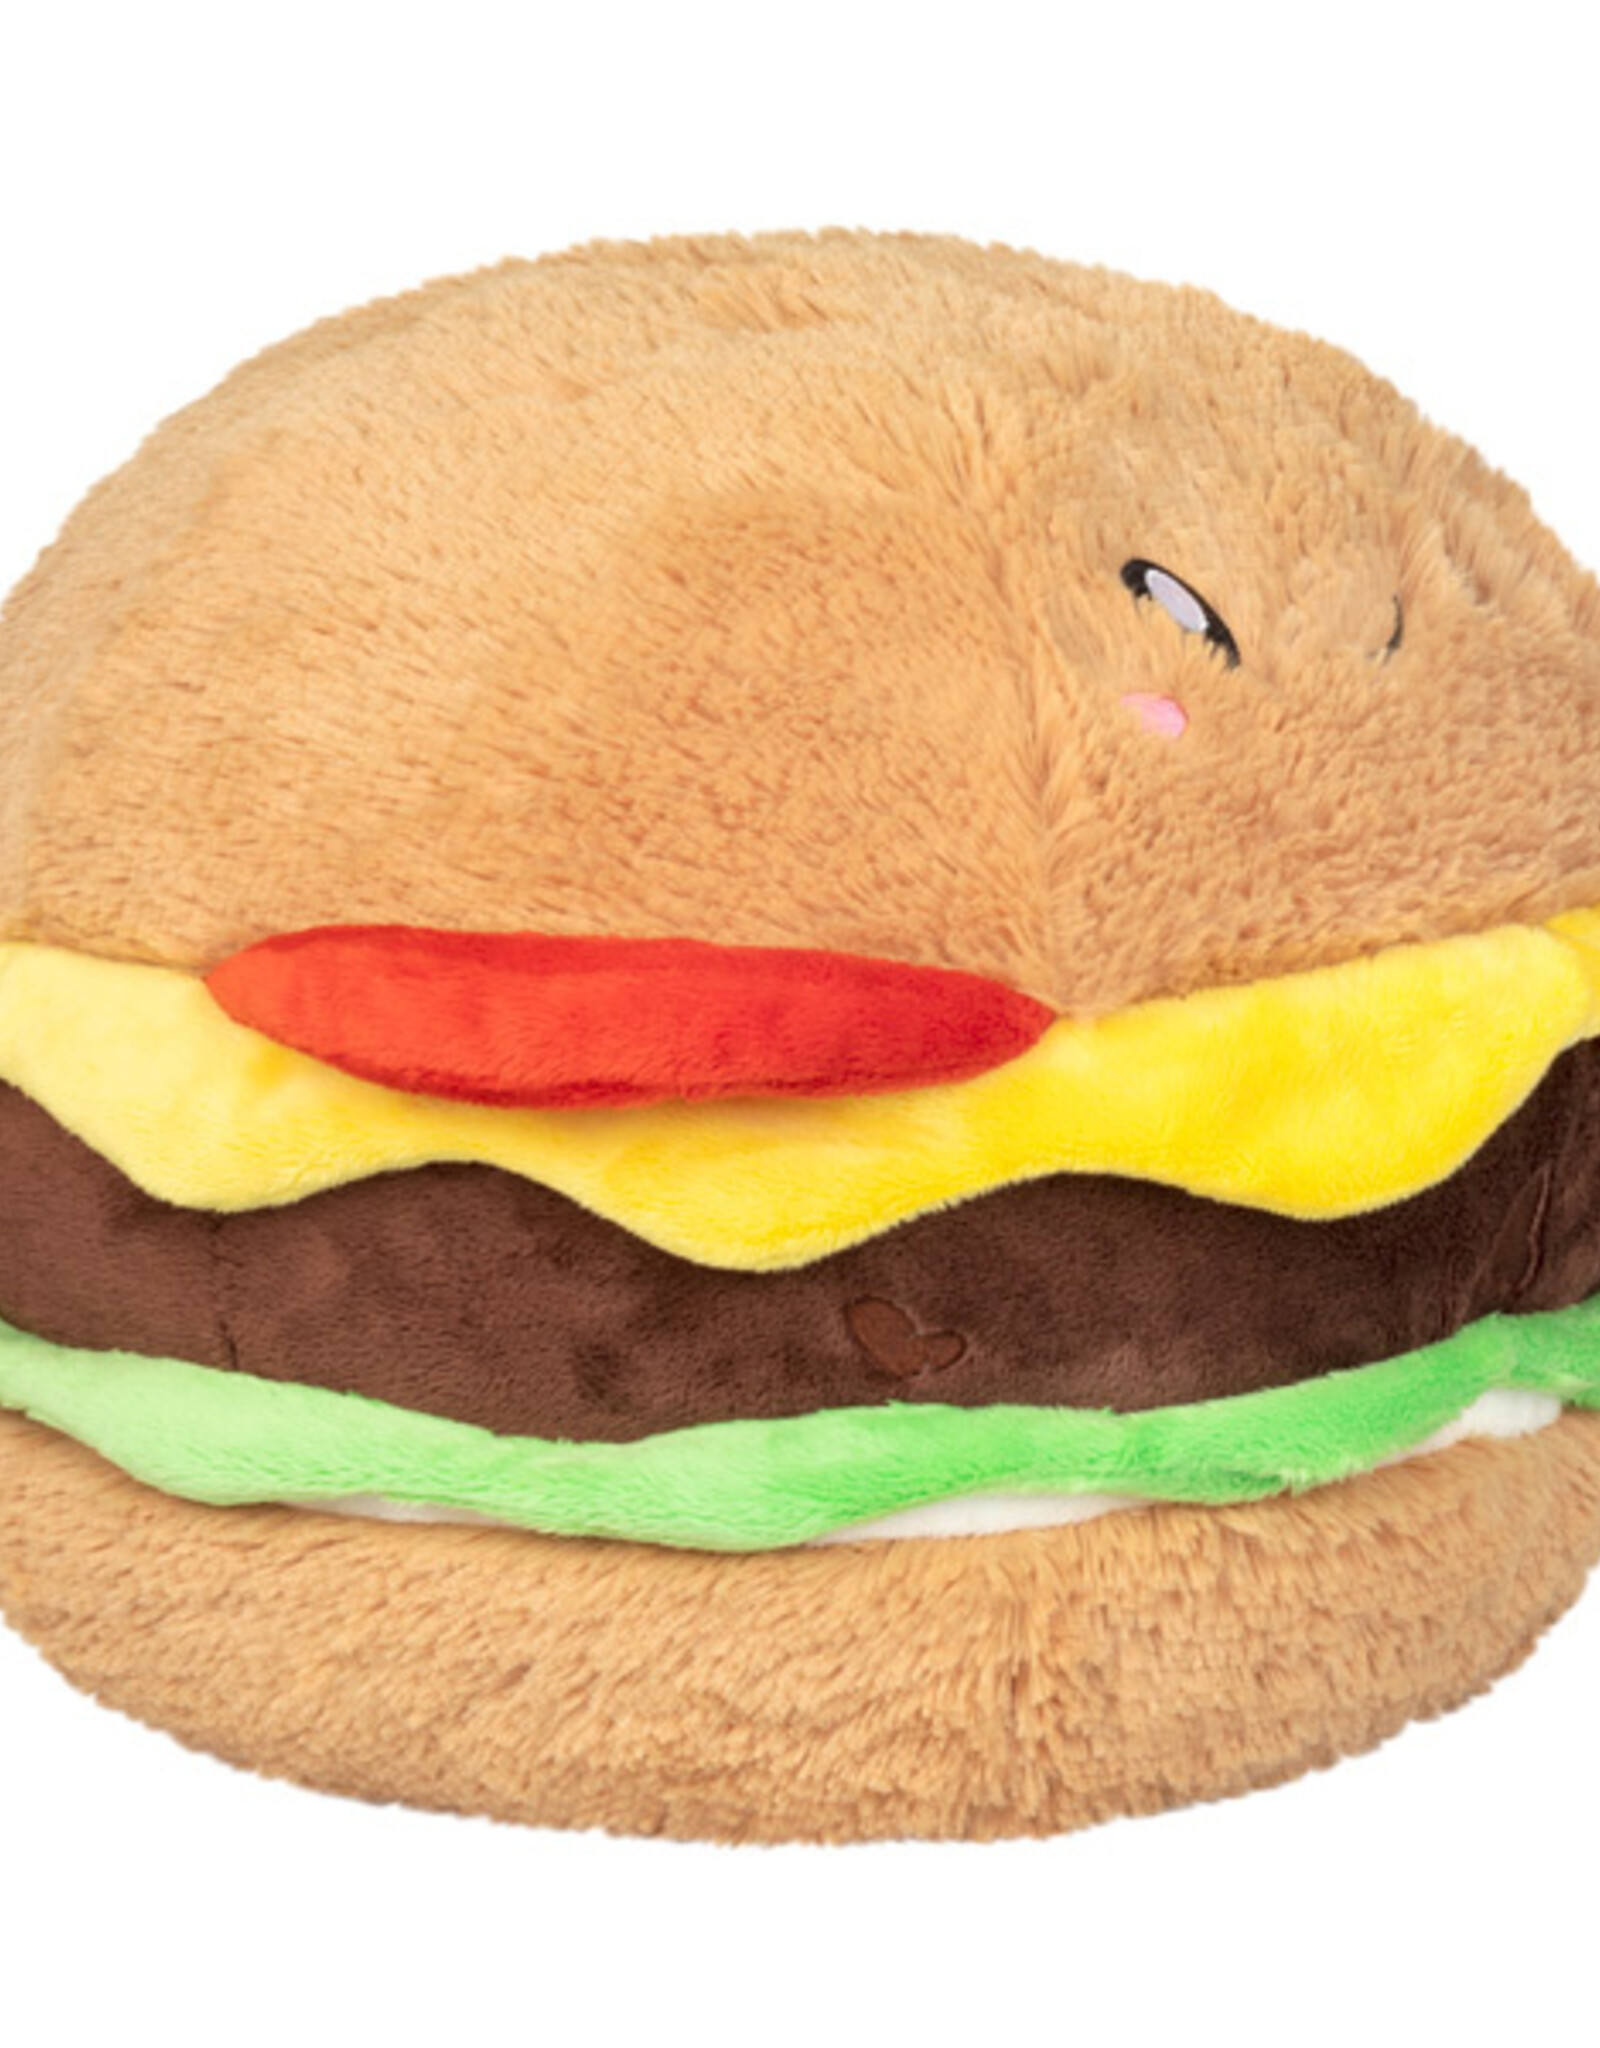 Squishable Cheeseburger 15"